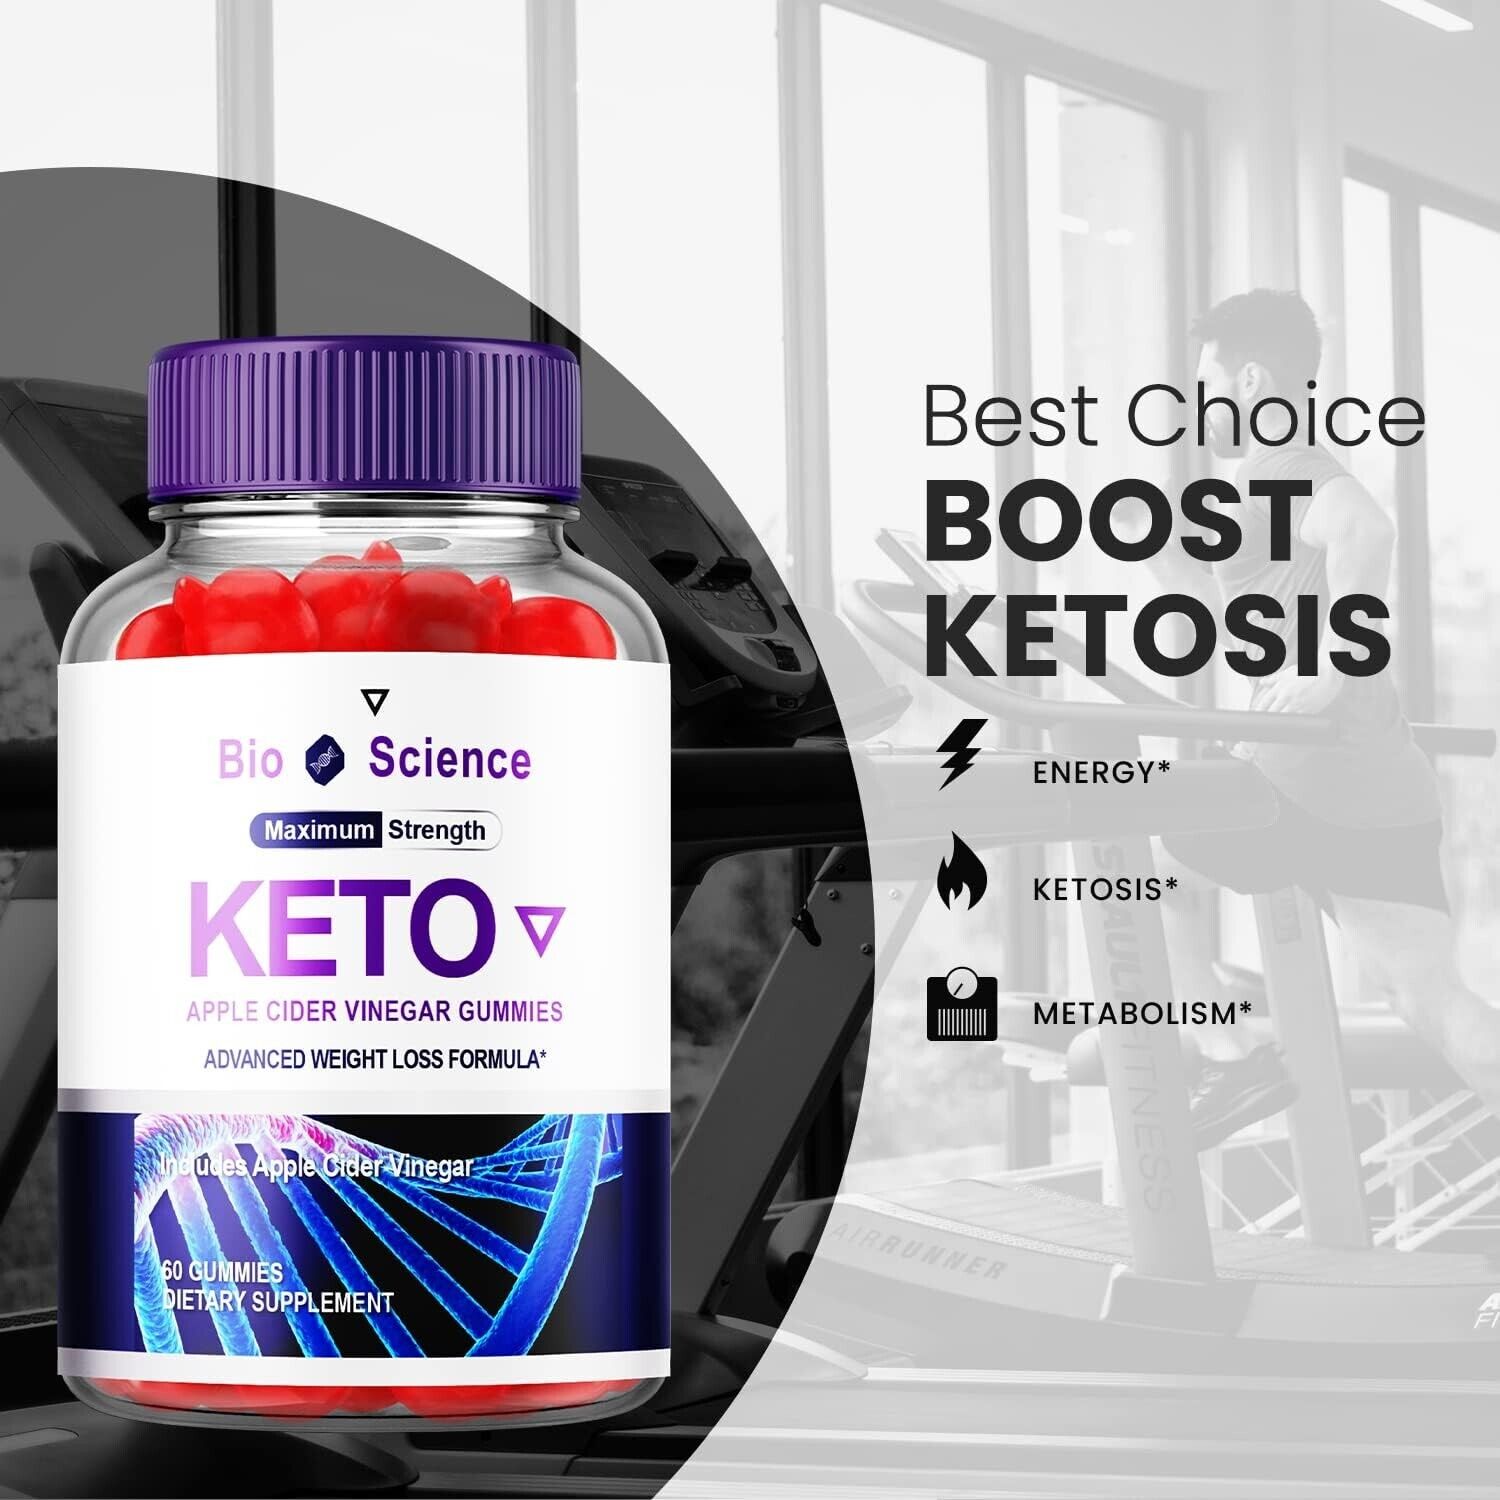 Bioscience Keto - Bioscience ACV Keto Gummies Weight Loss (2 Pack)